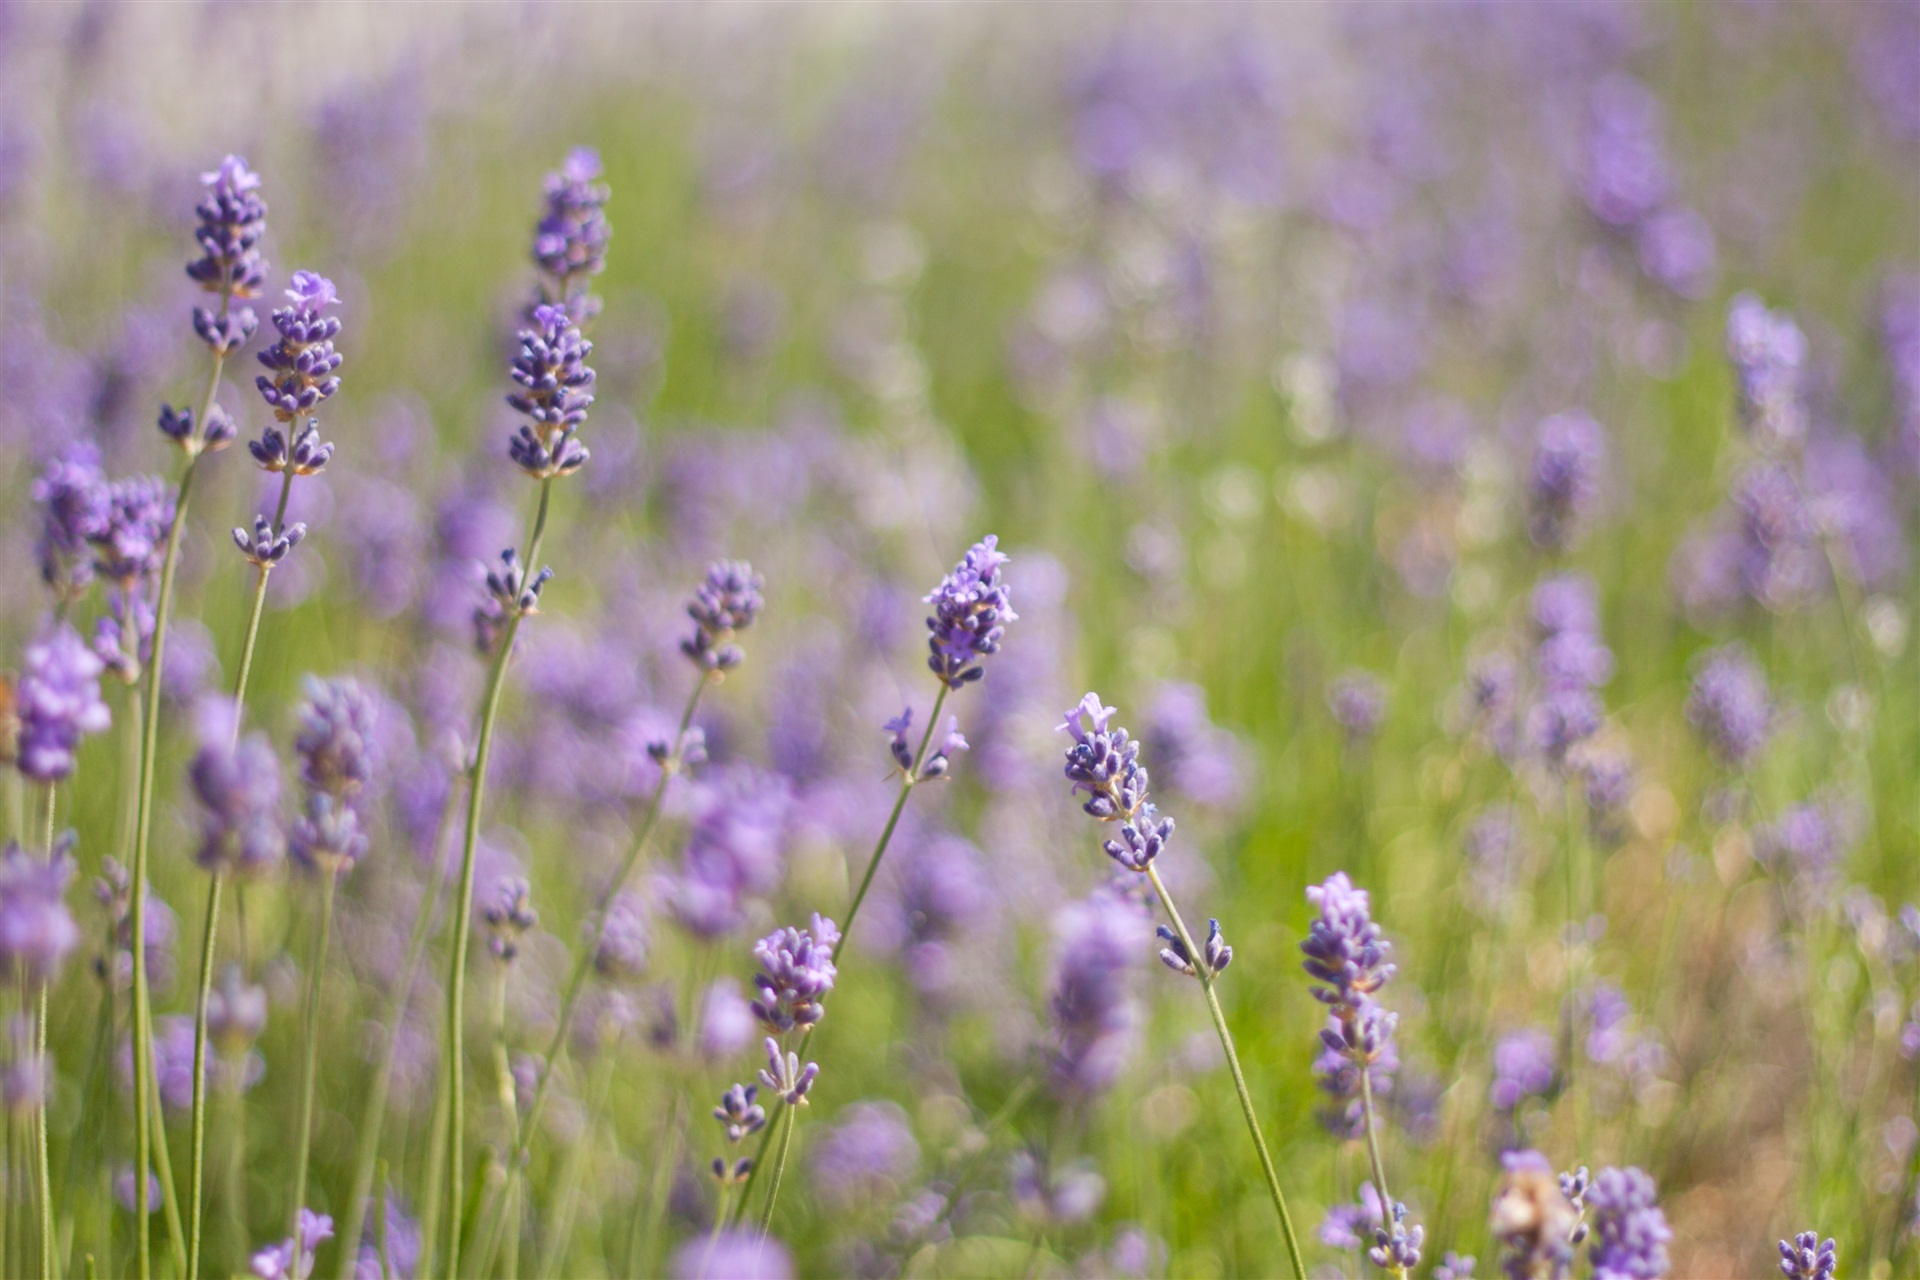 Handy-Wallpaper Lavendel, Blumen, Erde/natur kostenlos herunterladen.